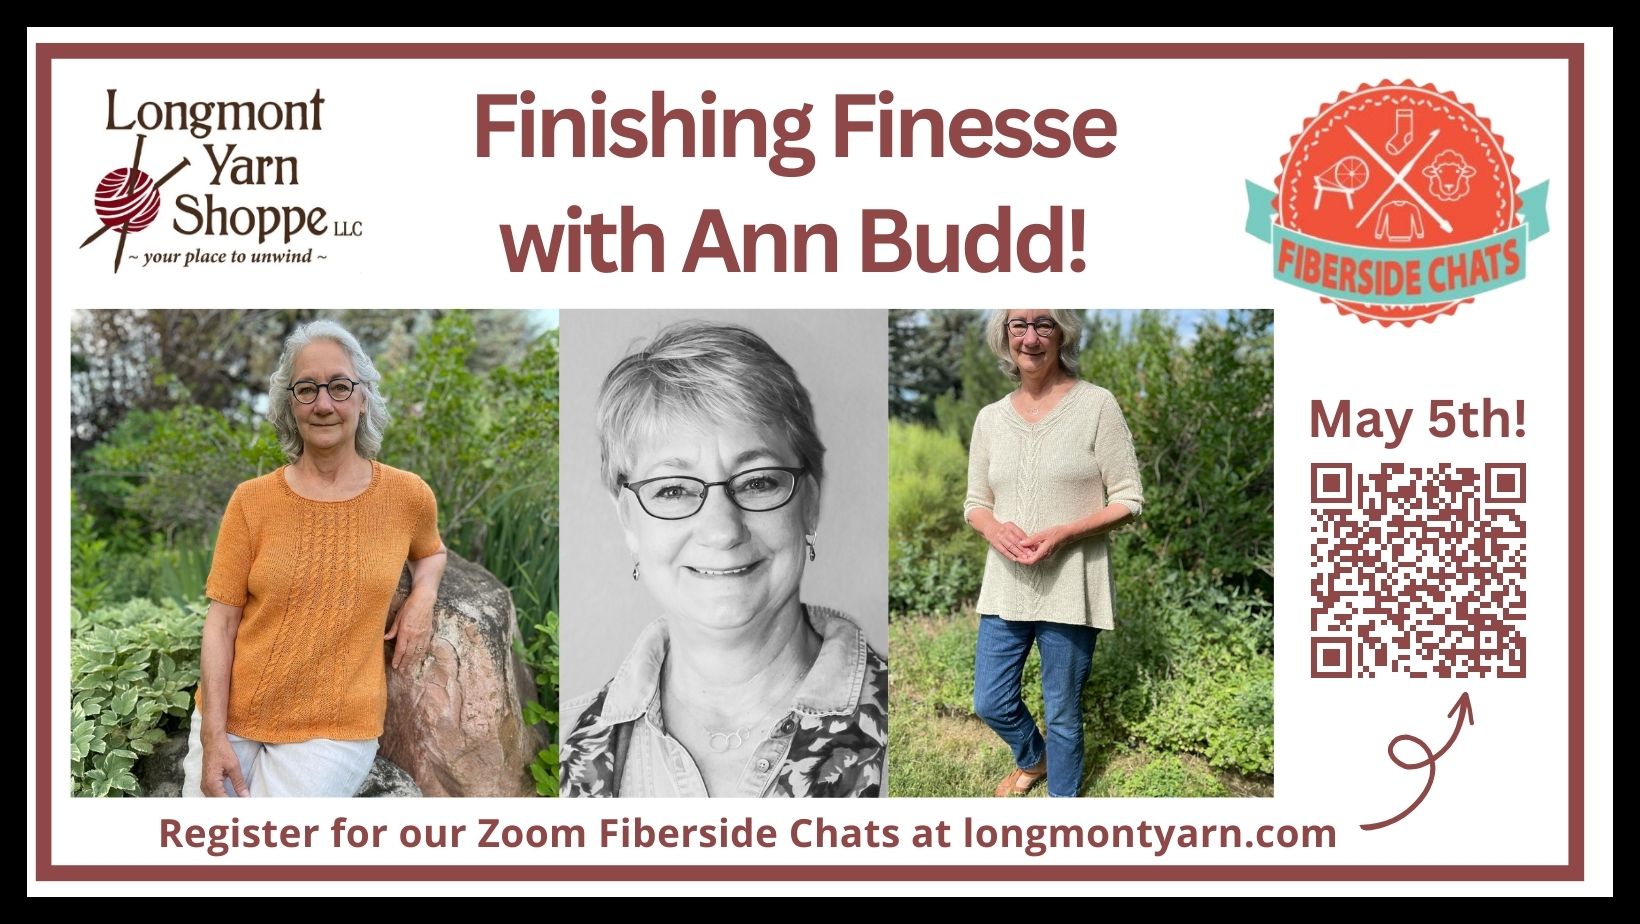 Finishing Finesse with Ann Budd on Fiberside Chats!